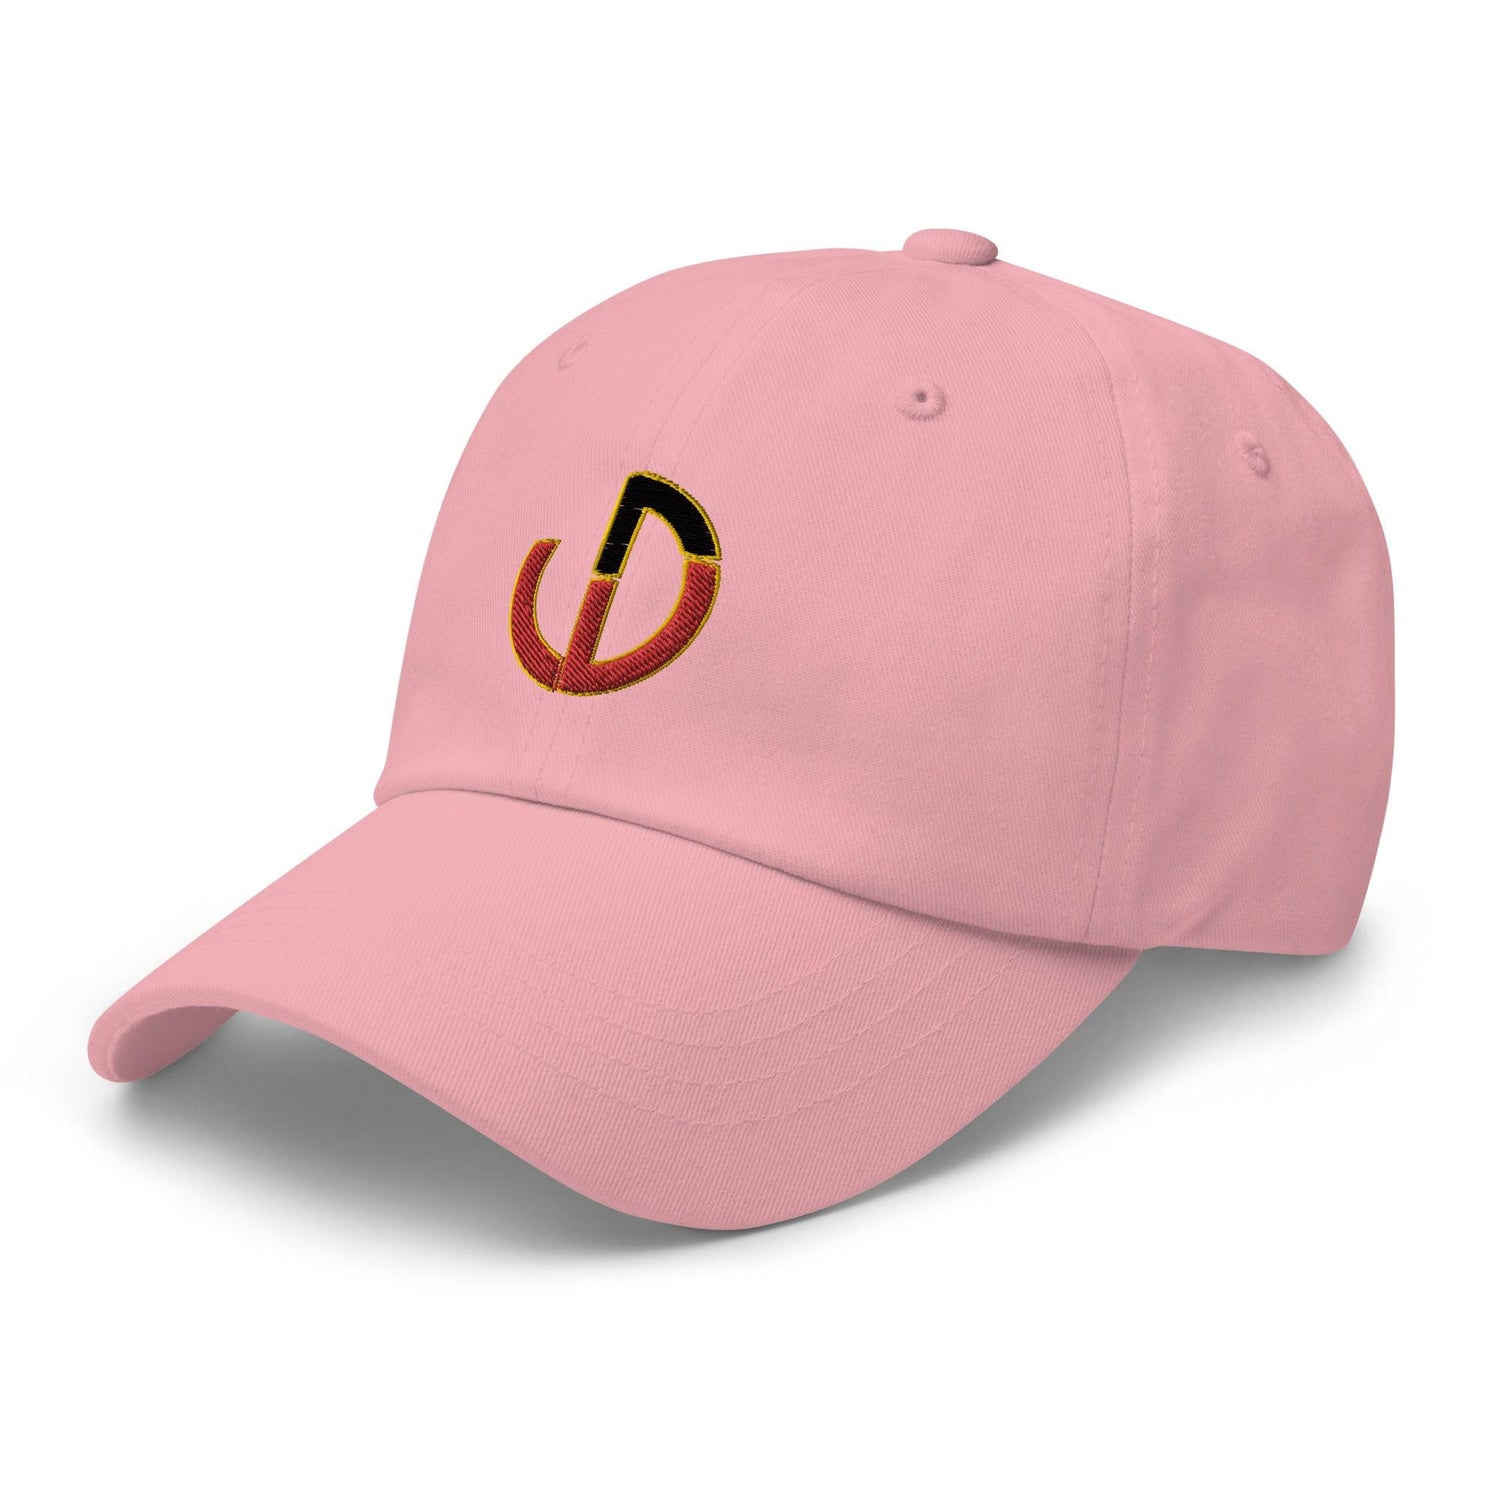 DeAnna Wilson "Essential" hat - Fan Arch